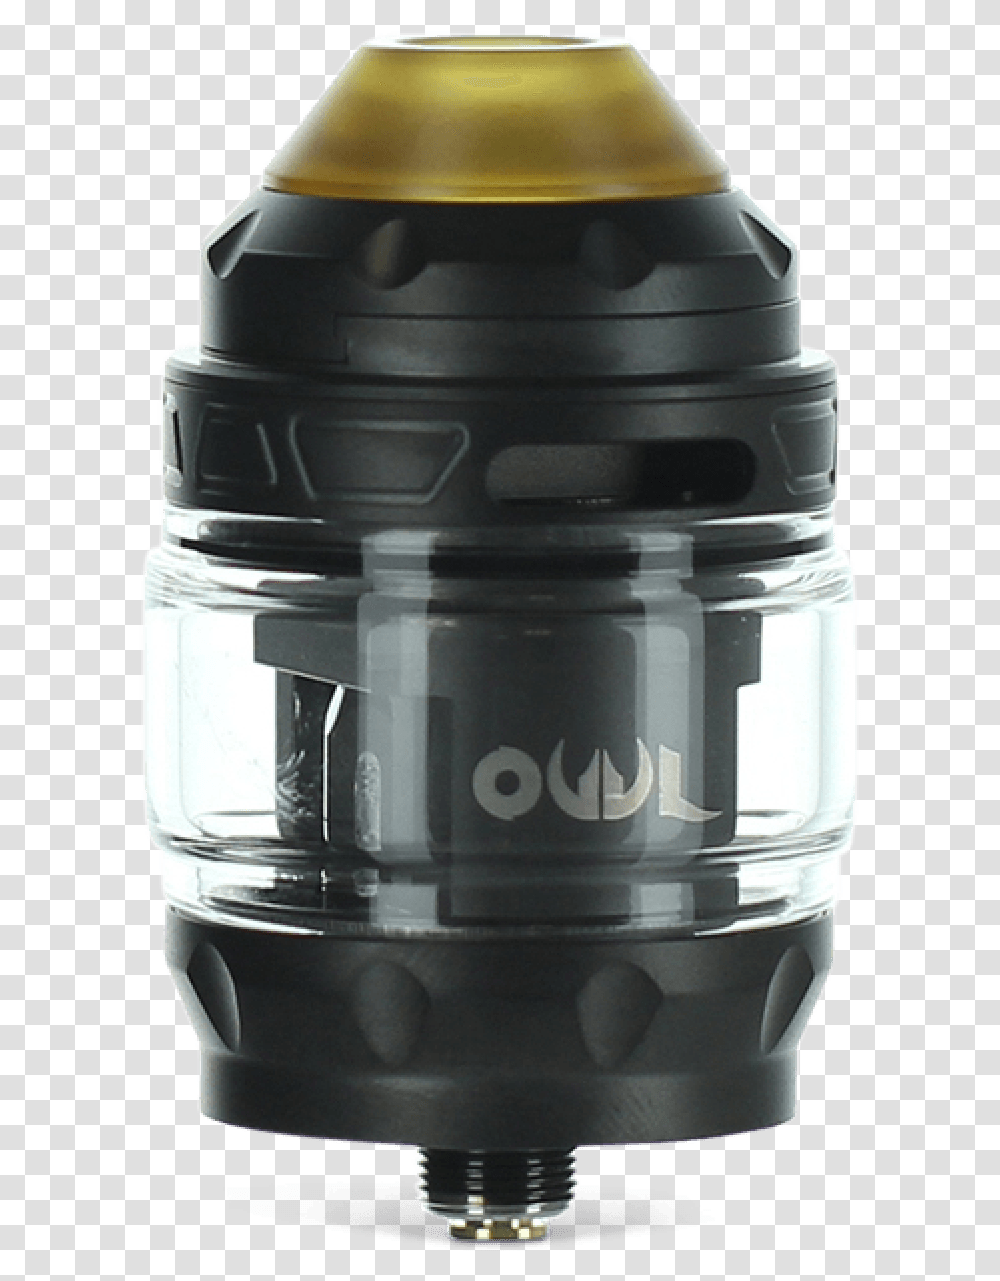 Advken Owl Sub Ohm Tank Black Home Appliance, Keg, Barrel, Mixer Transparent Png